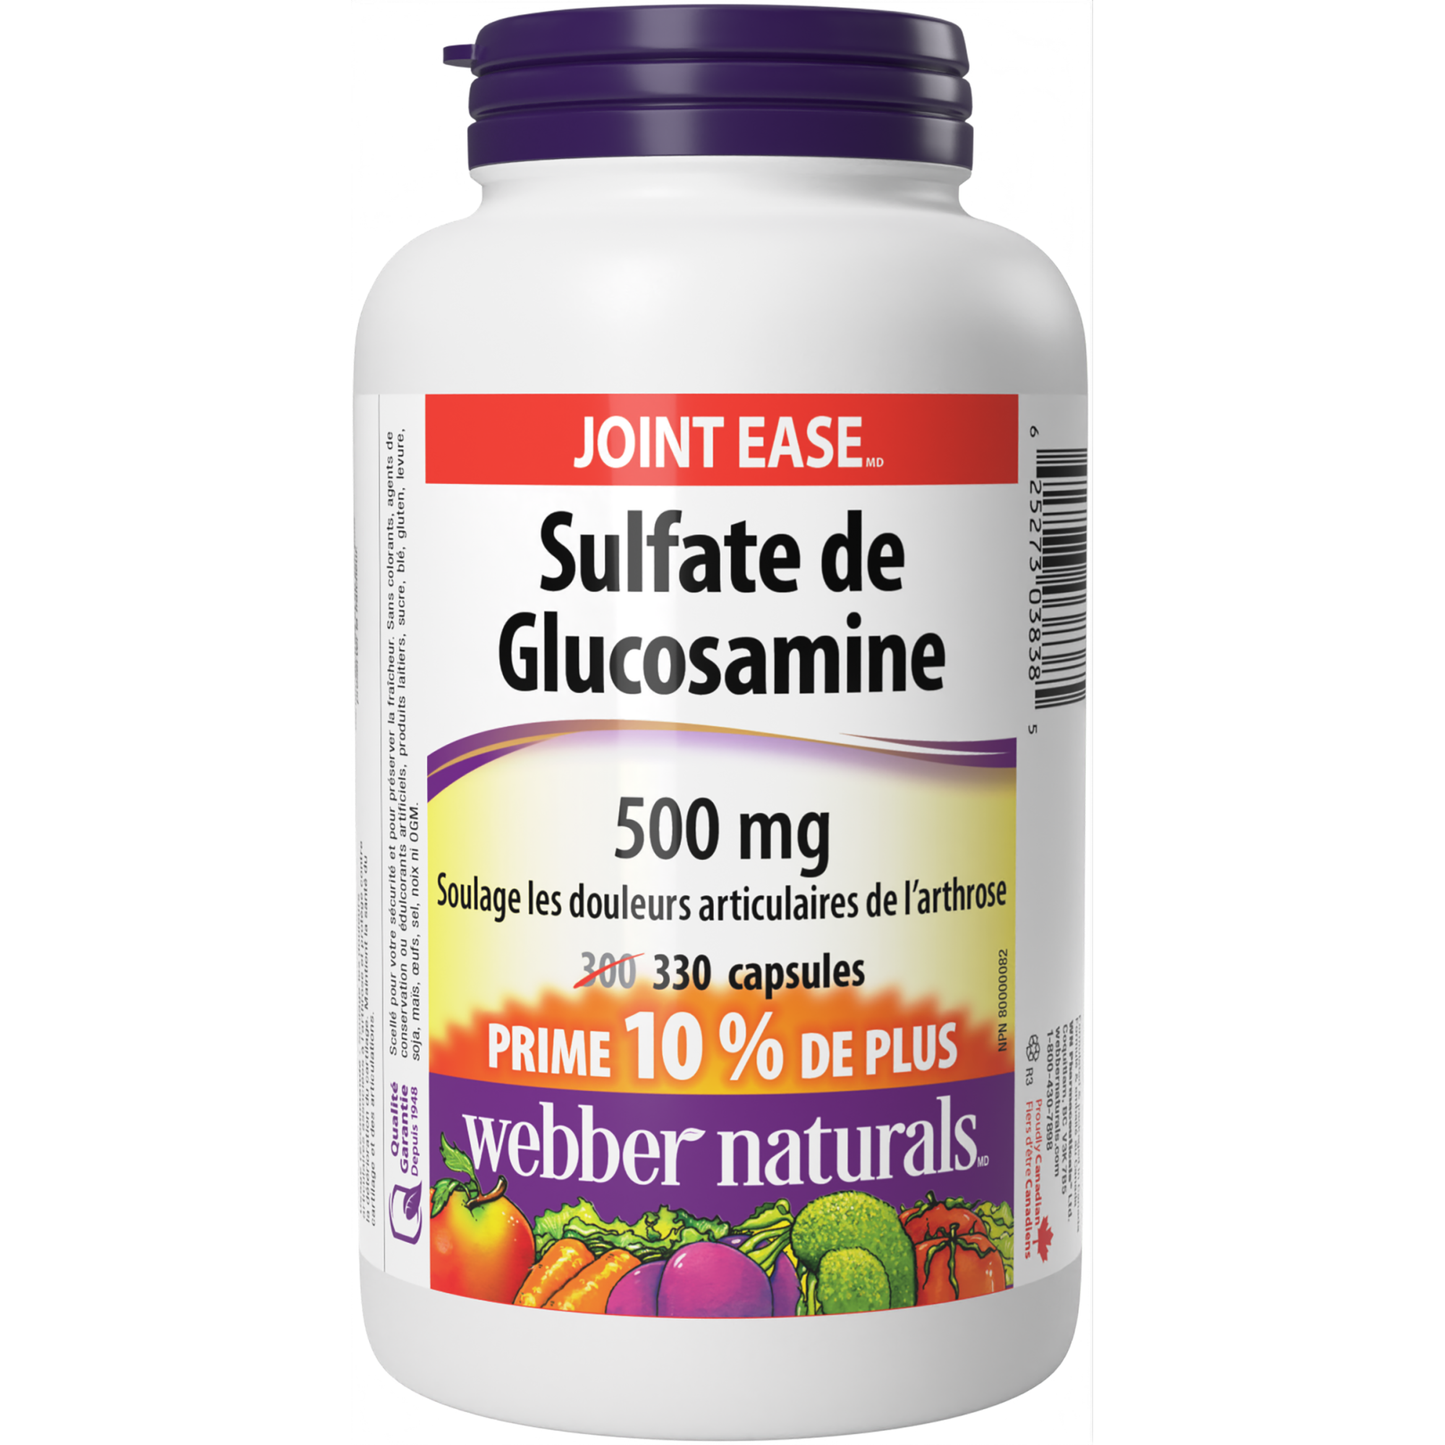 Sulfate de Glucosamine 500 mg for Webber Naturals|v|hi-res|WN3838